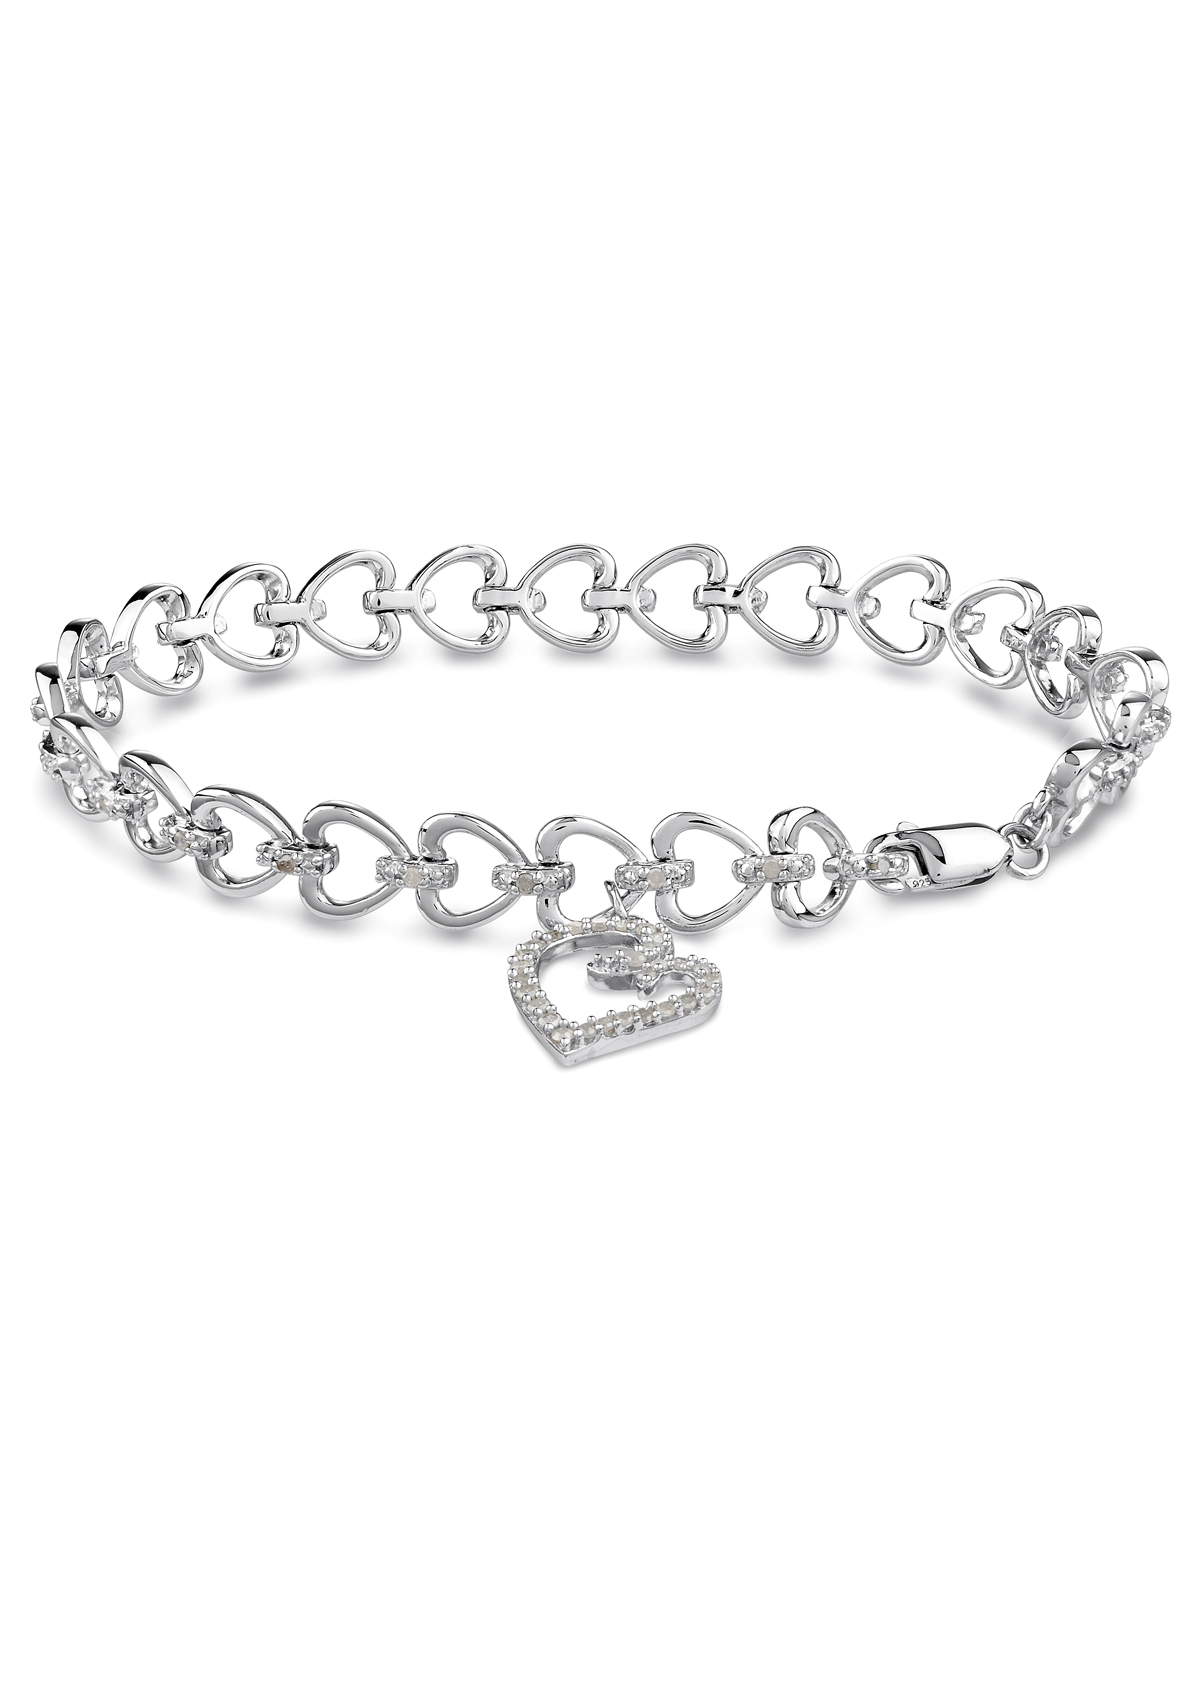 7 in 1/2 cttw  Diamond Bracelet Silver I-J  I3